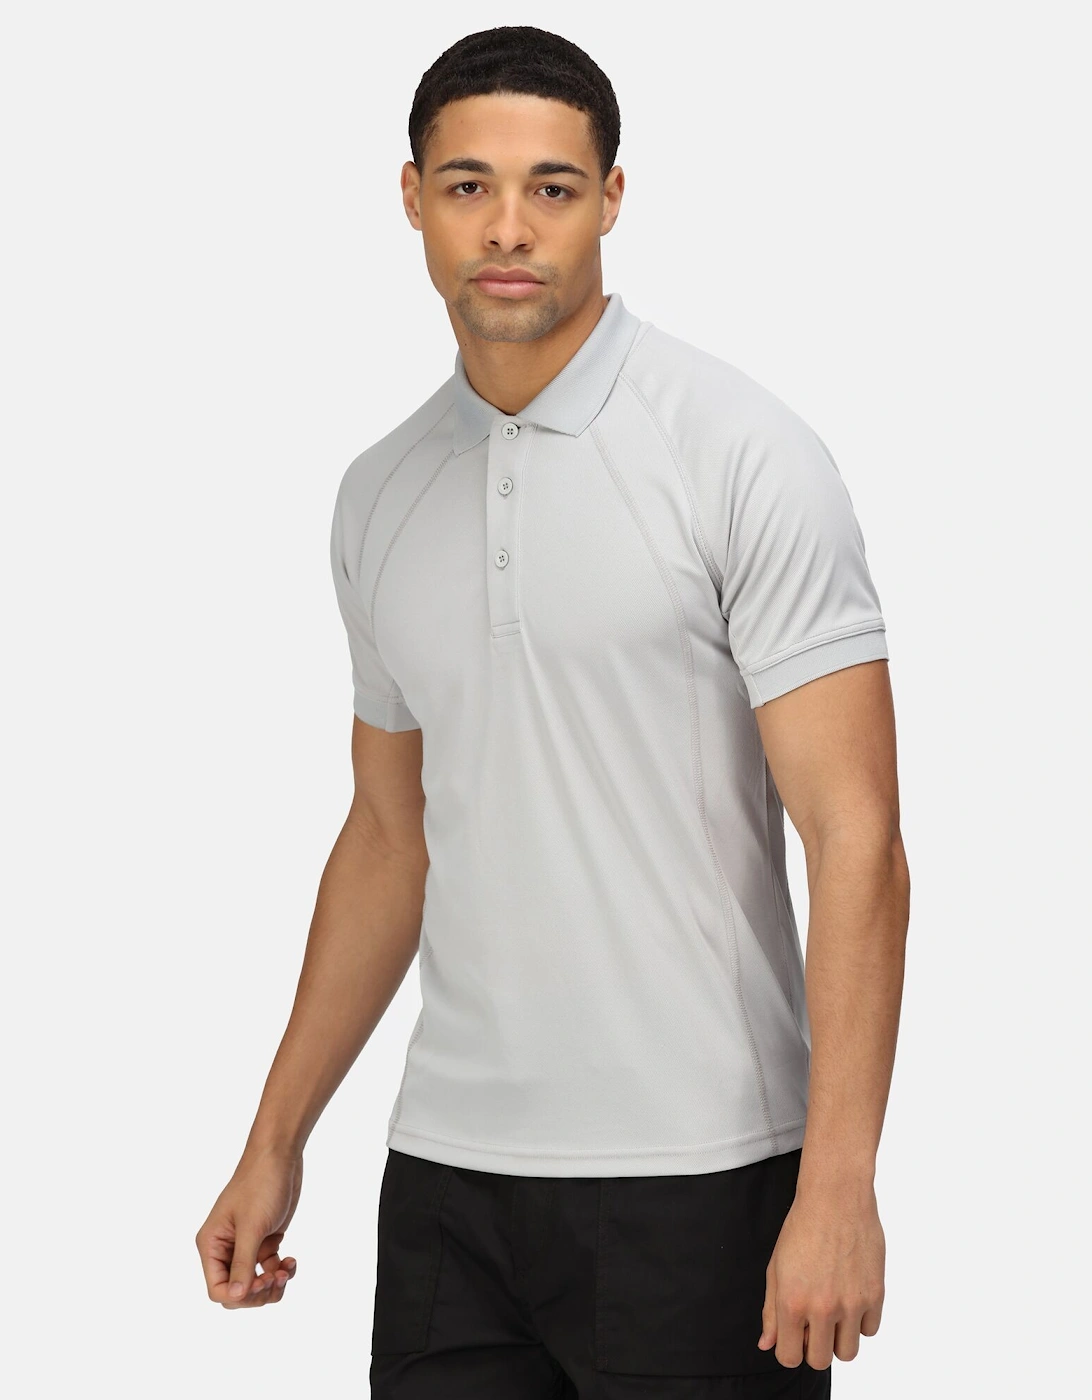 Hardwear Mens Coolweave Short Sleeve Polo Shirt